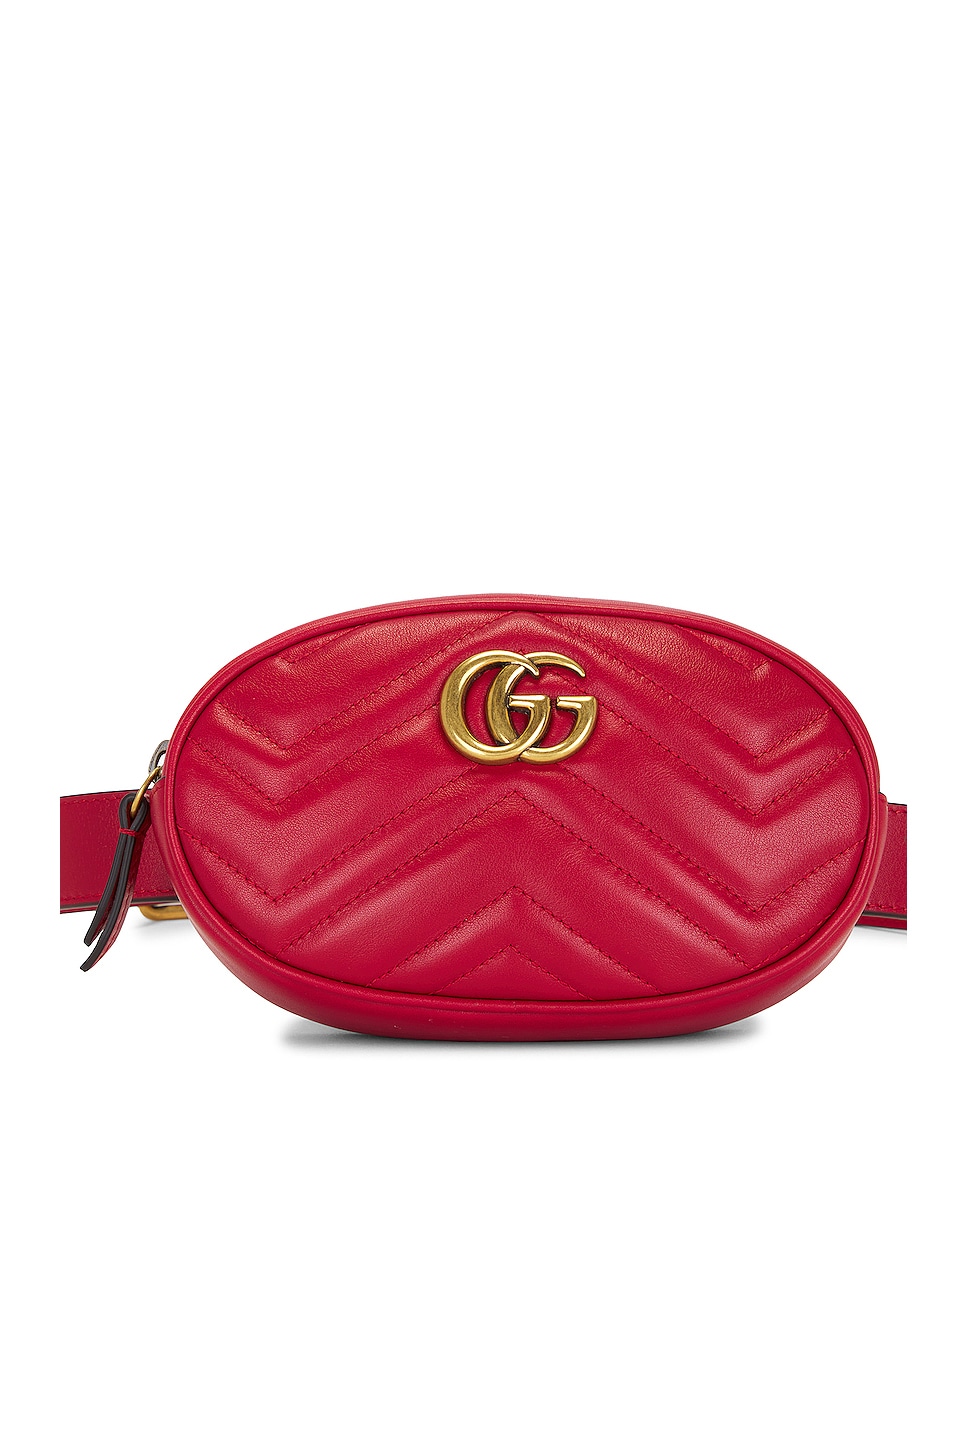 Gucci mini GG marmont shoulder bag calfskin red GHW